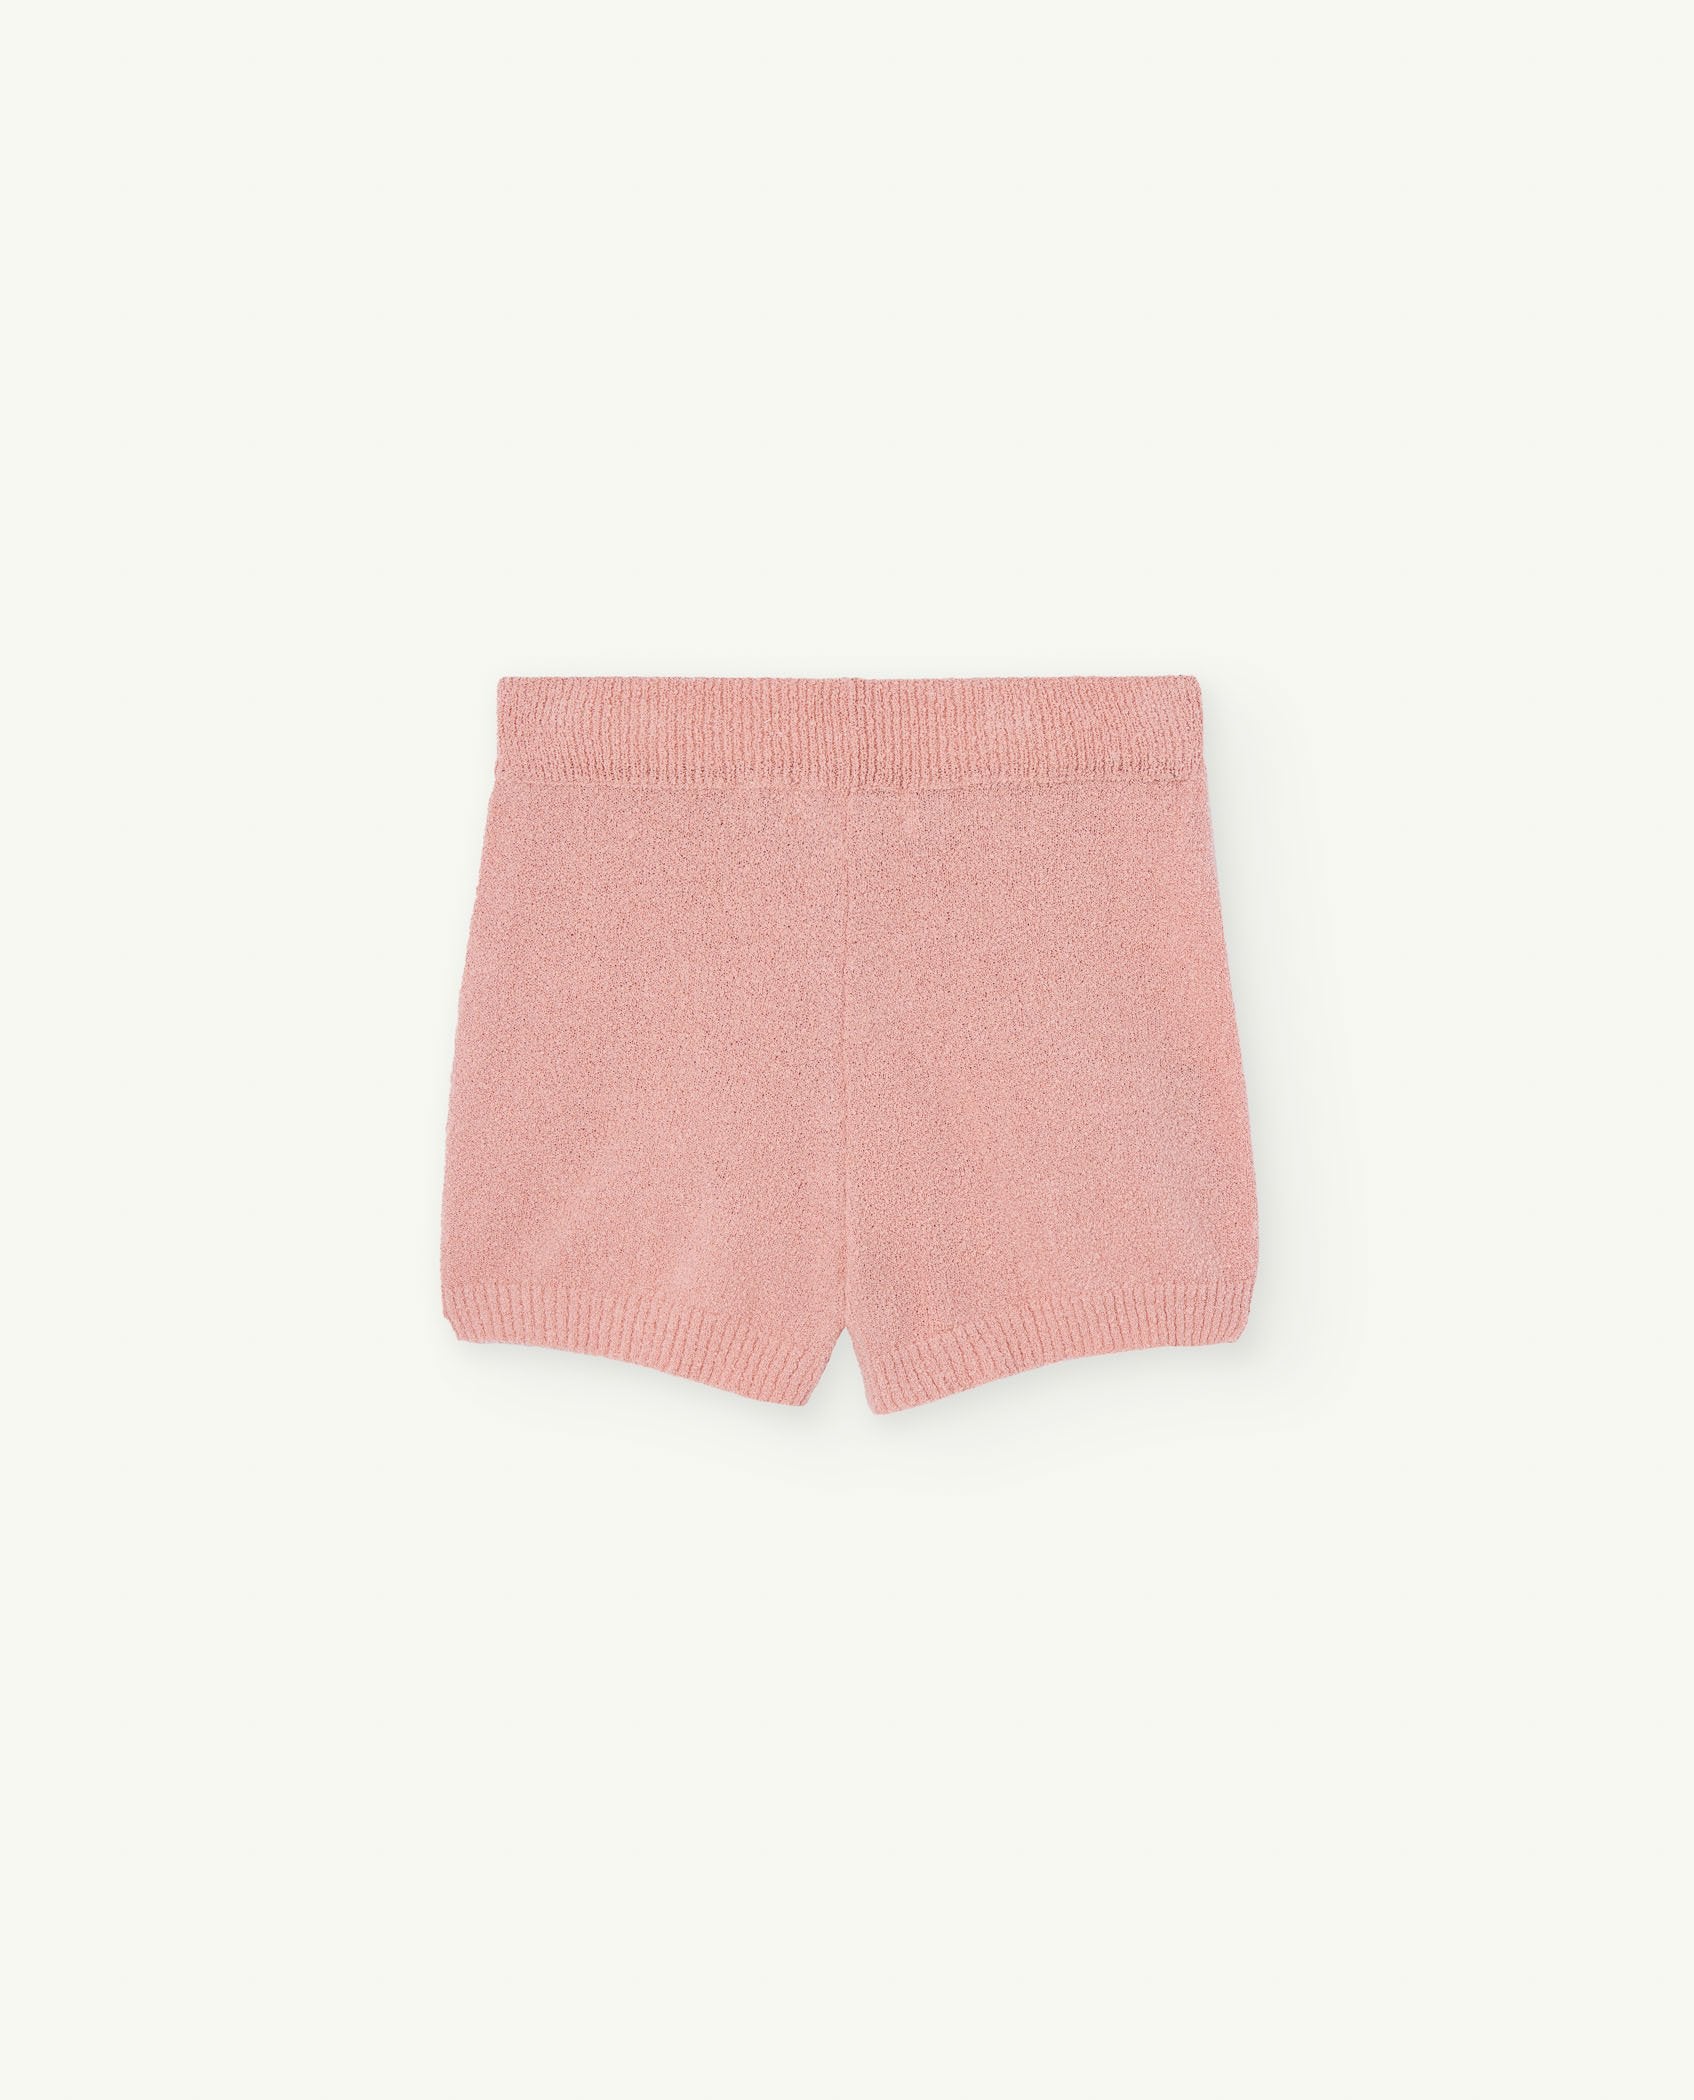 Soft Pink Opossum Shorts PRODUCT BACK